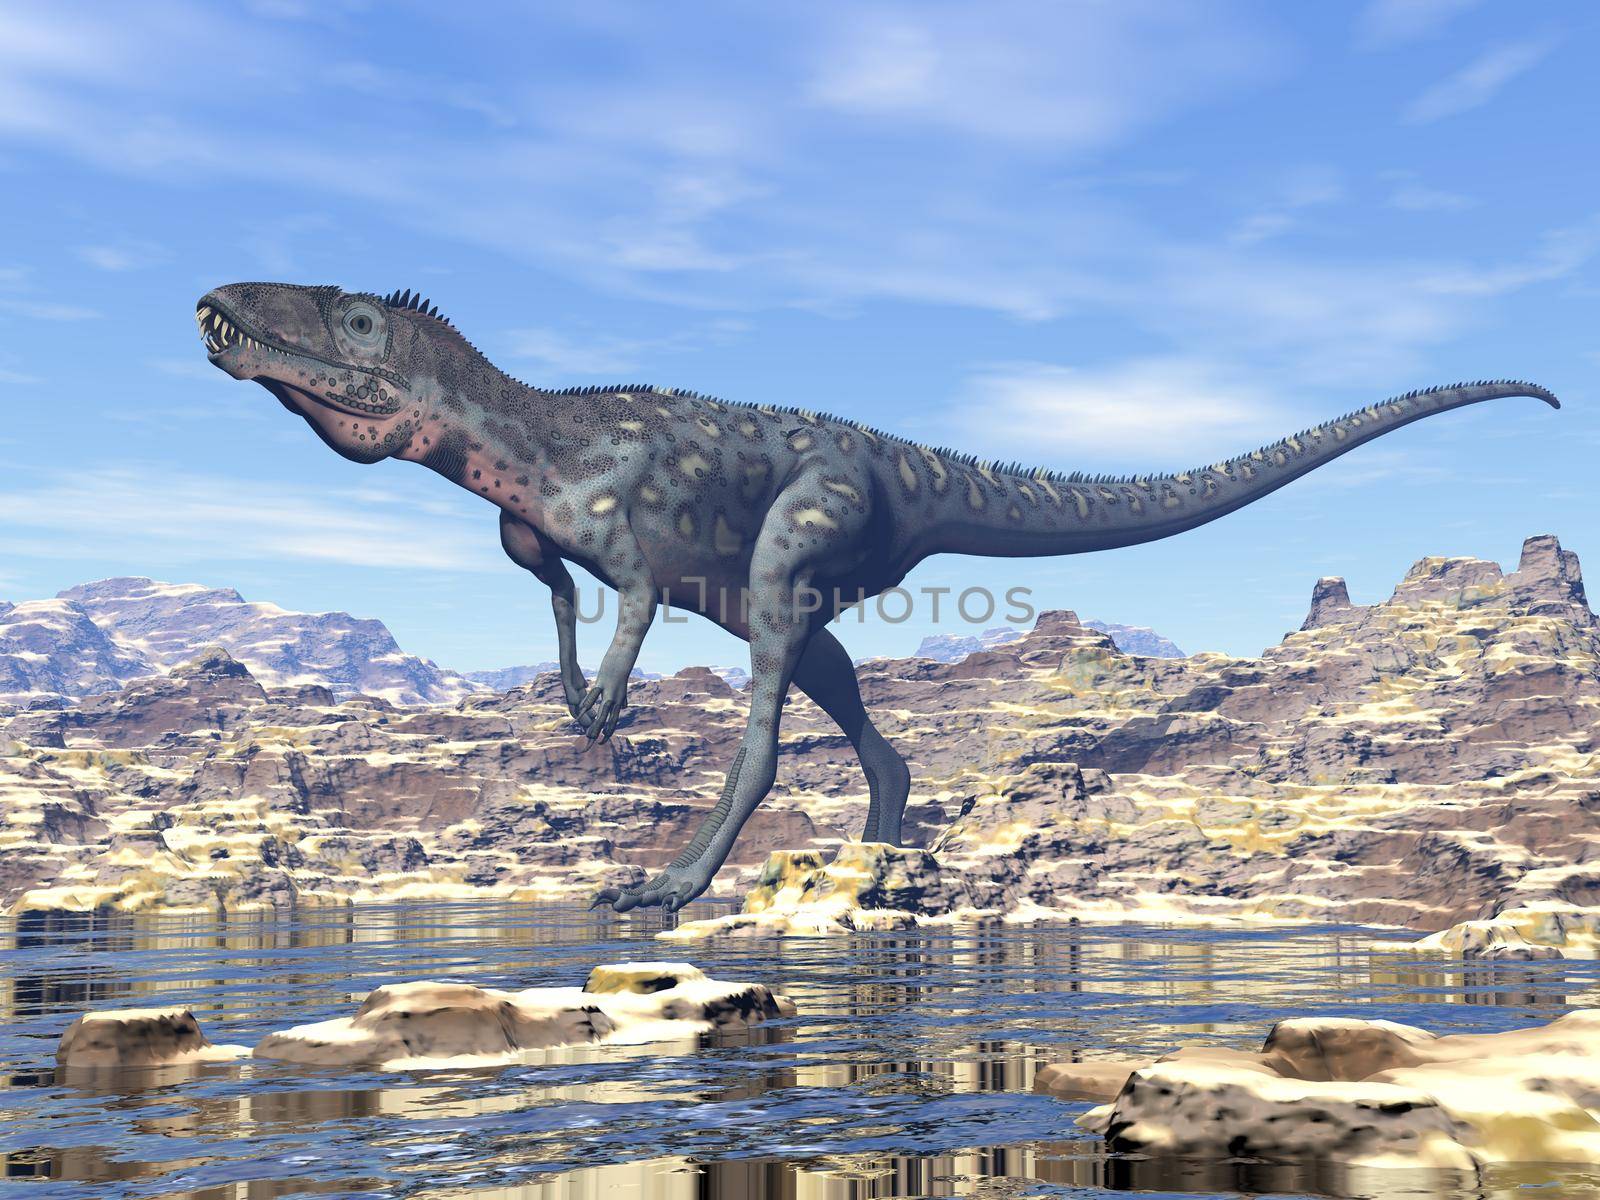 Masiakasaurus dinosaur walking in the desert next to water by day - 3D render